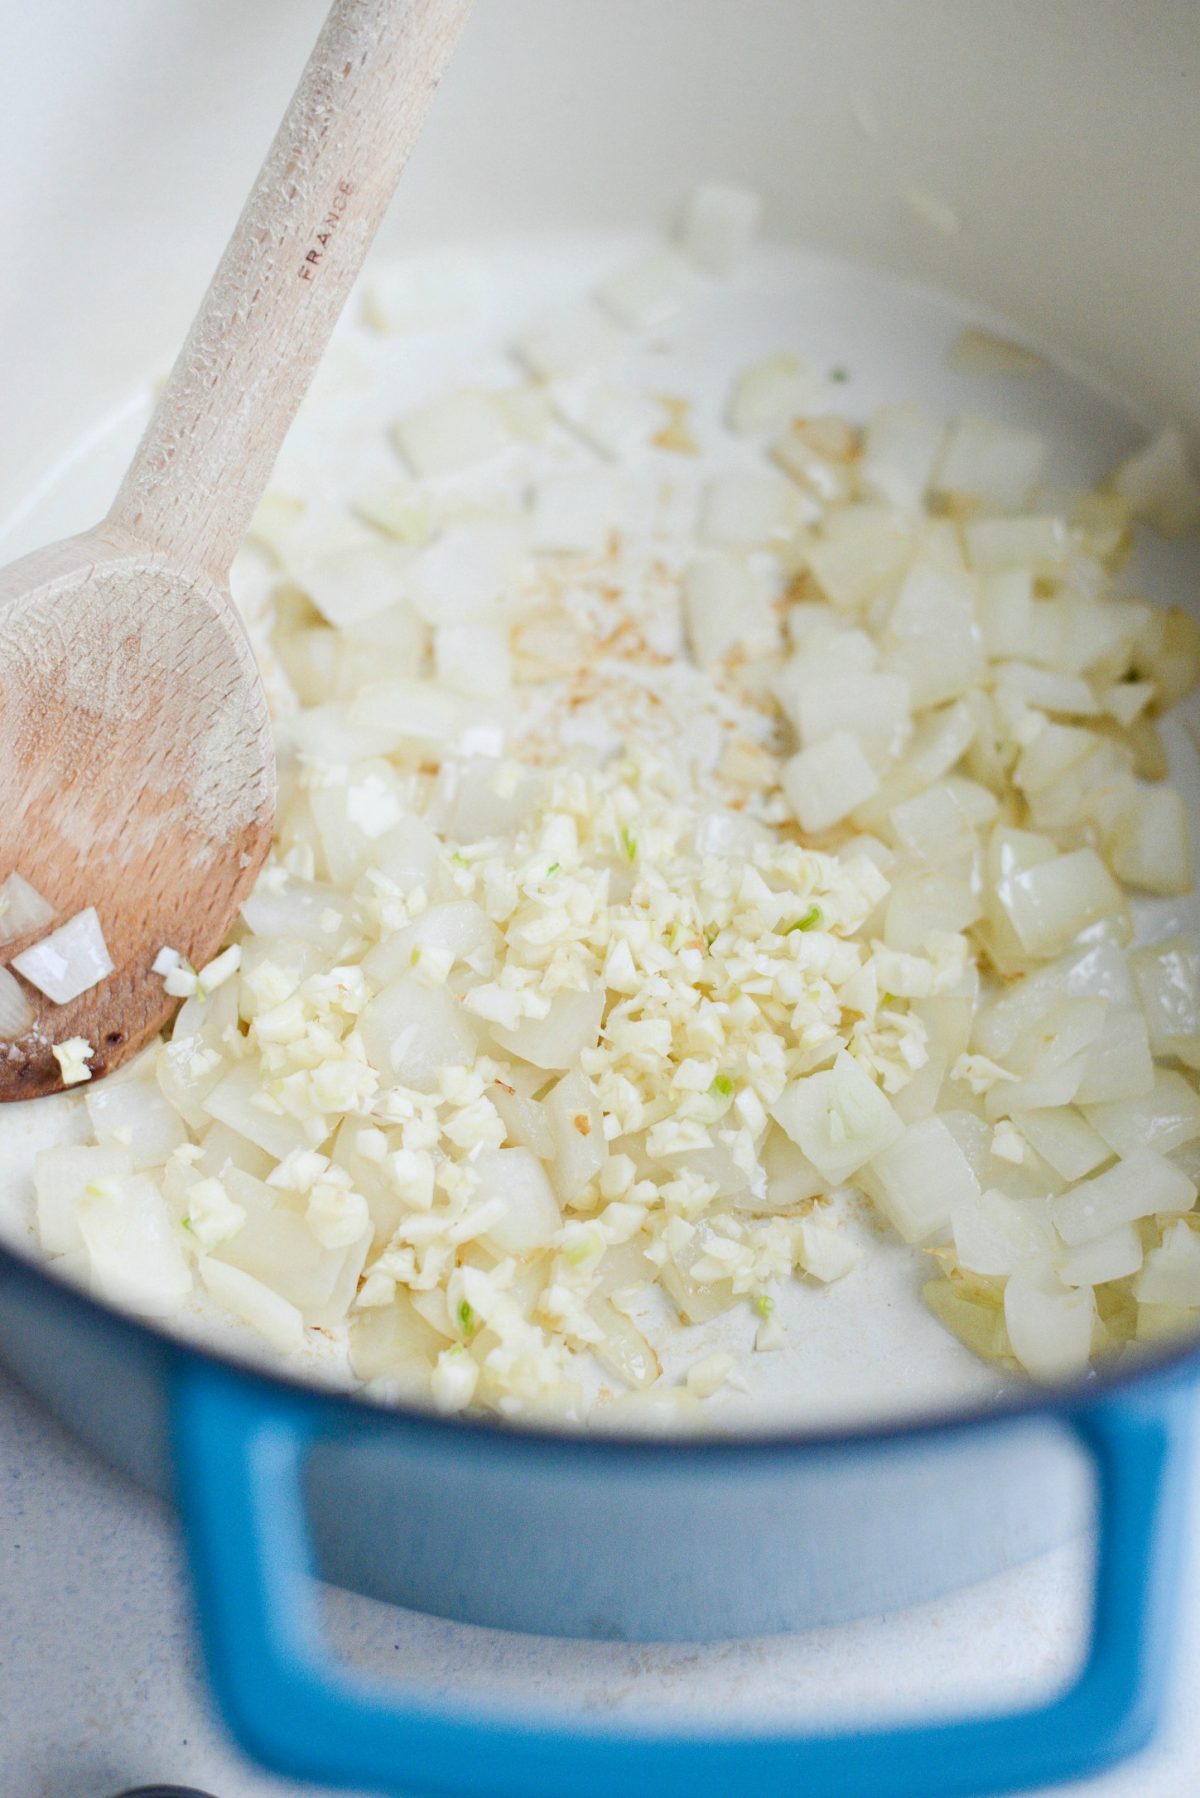 Once softened add in garlic..